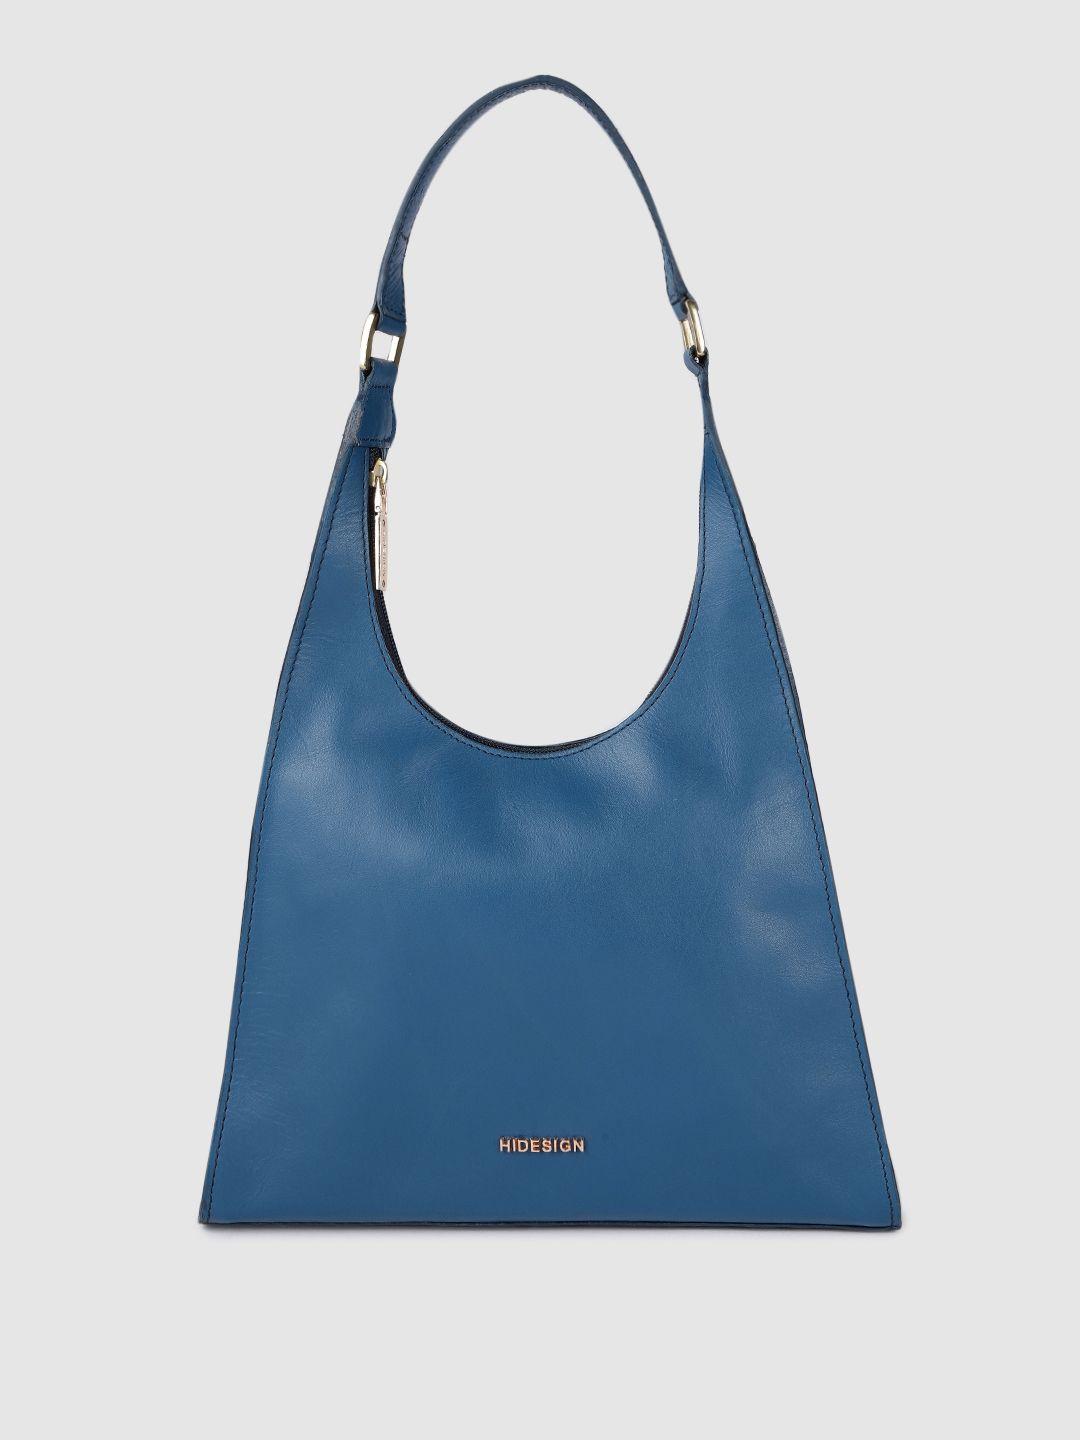 hidesign women blue leather solid hobo bag